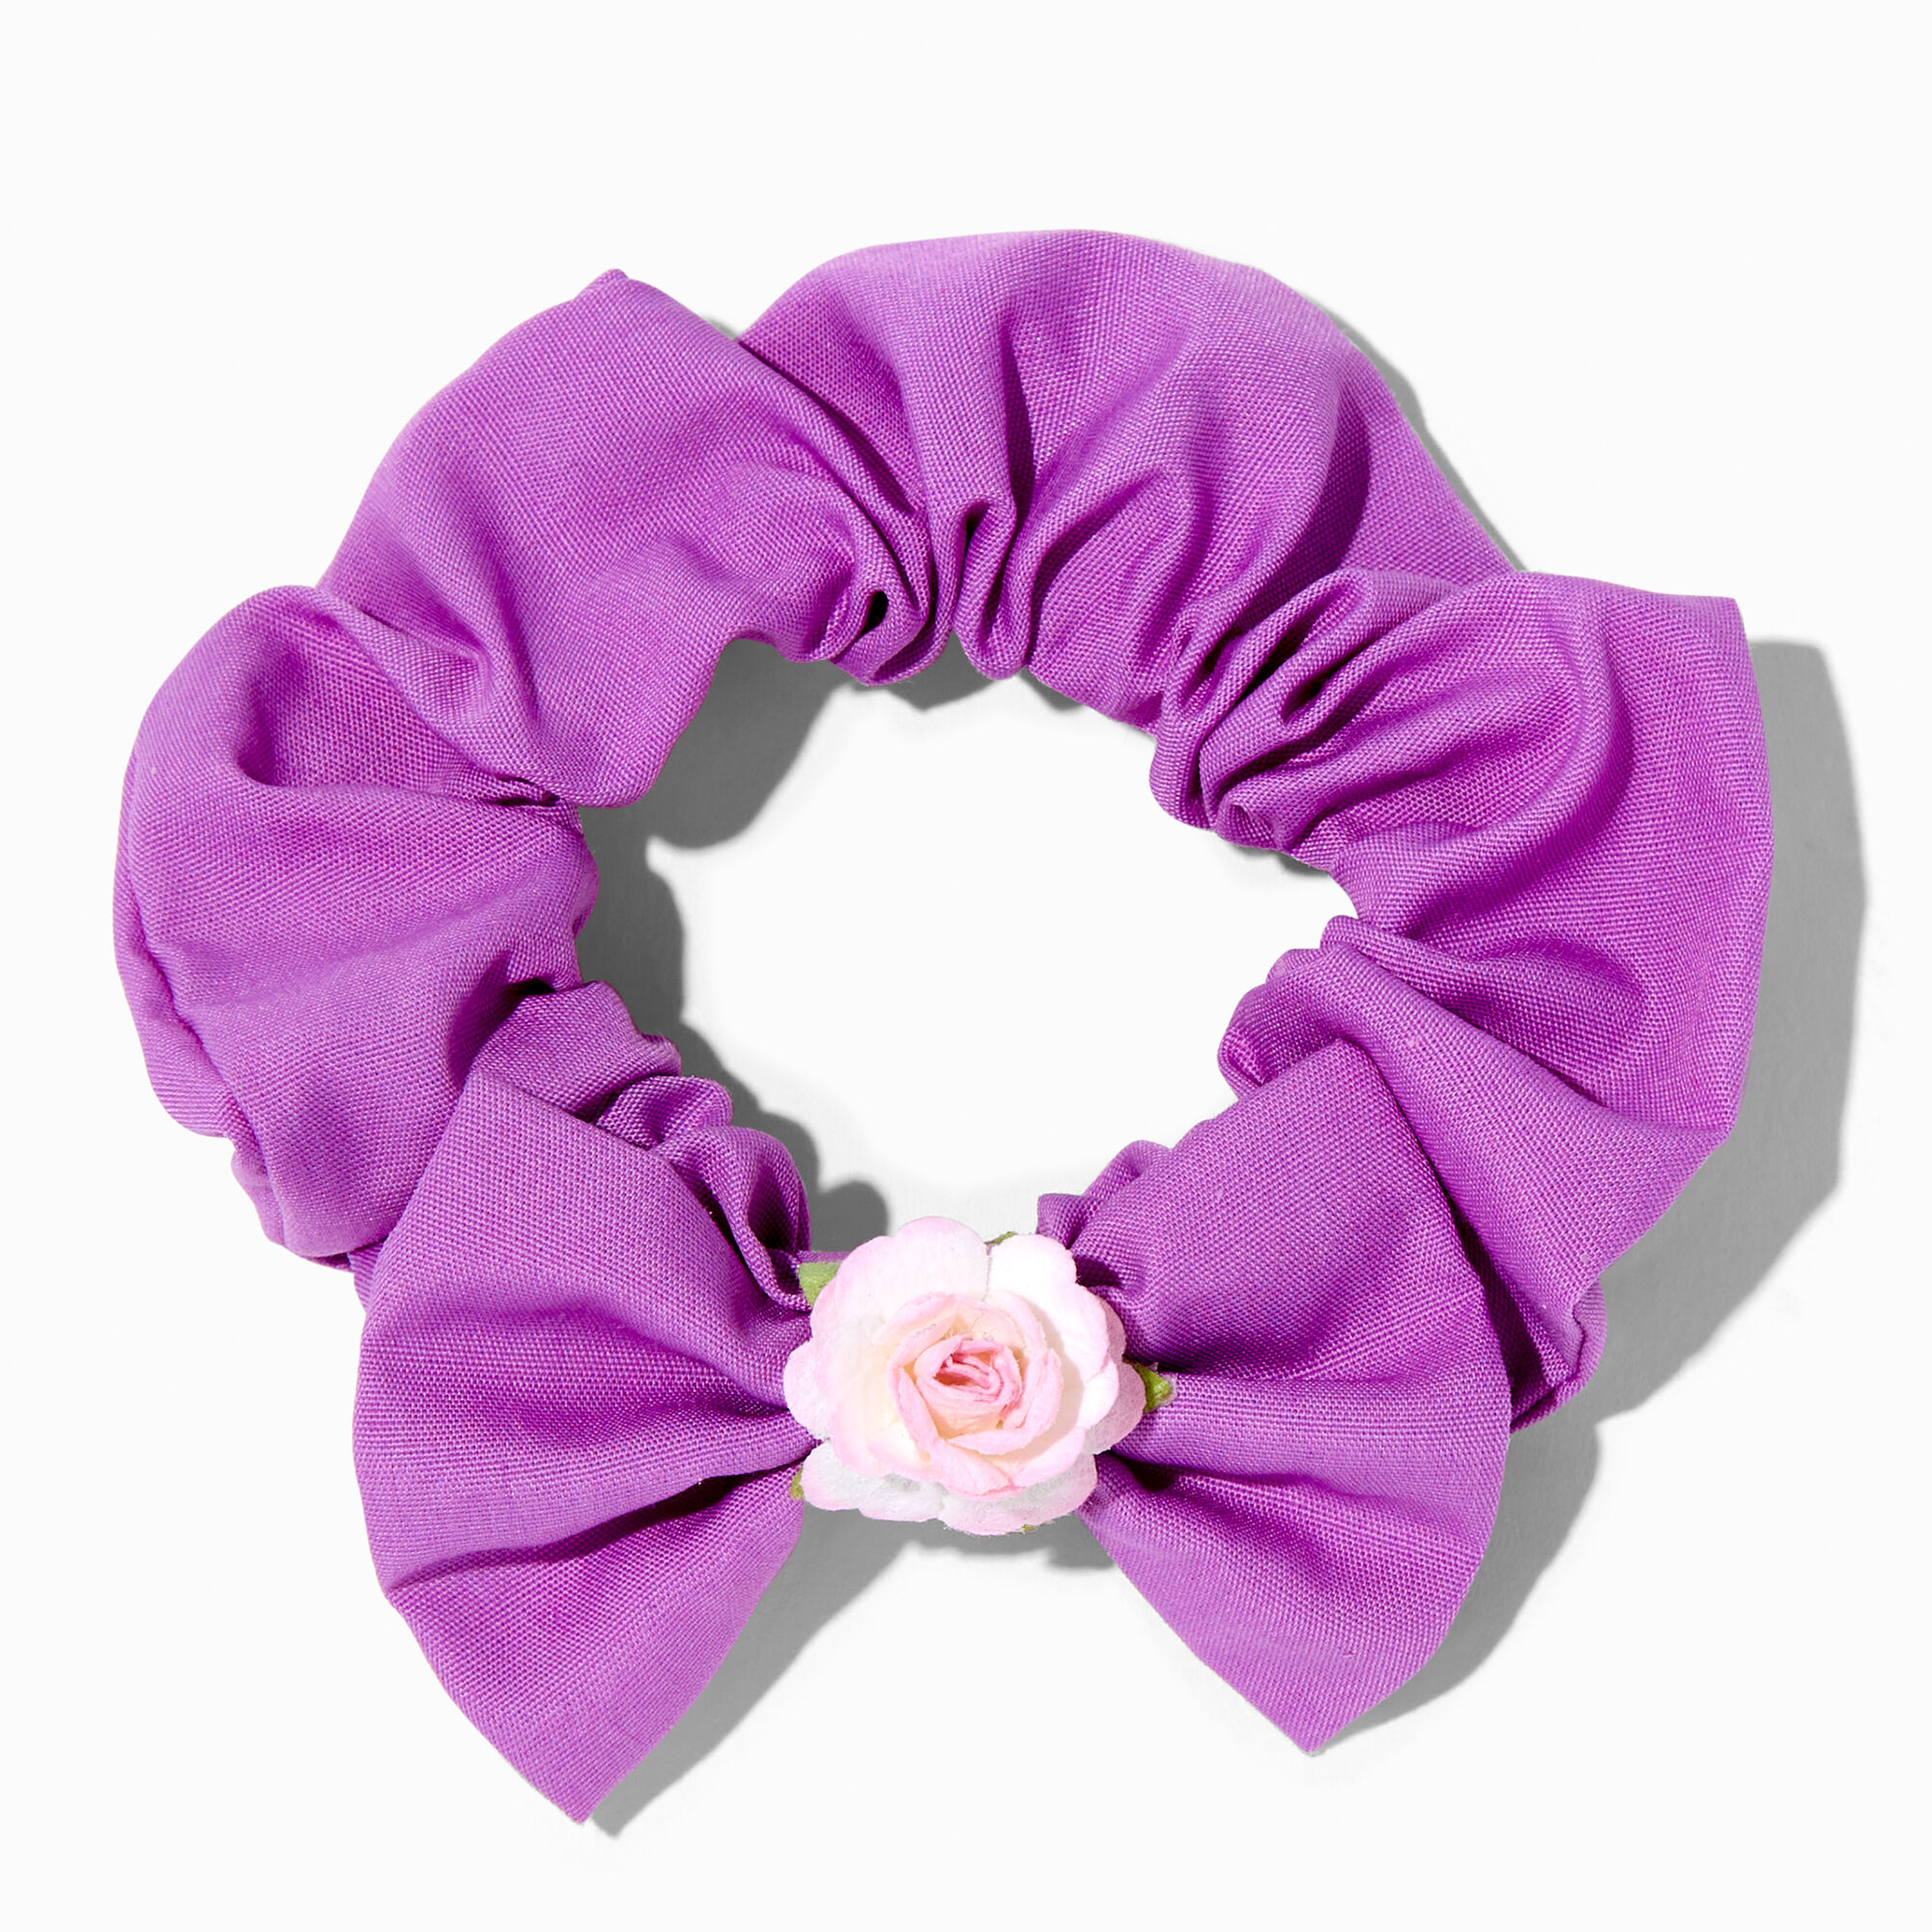 View Claires Club Dainty Flower Scrunchie Purple information